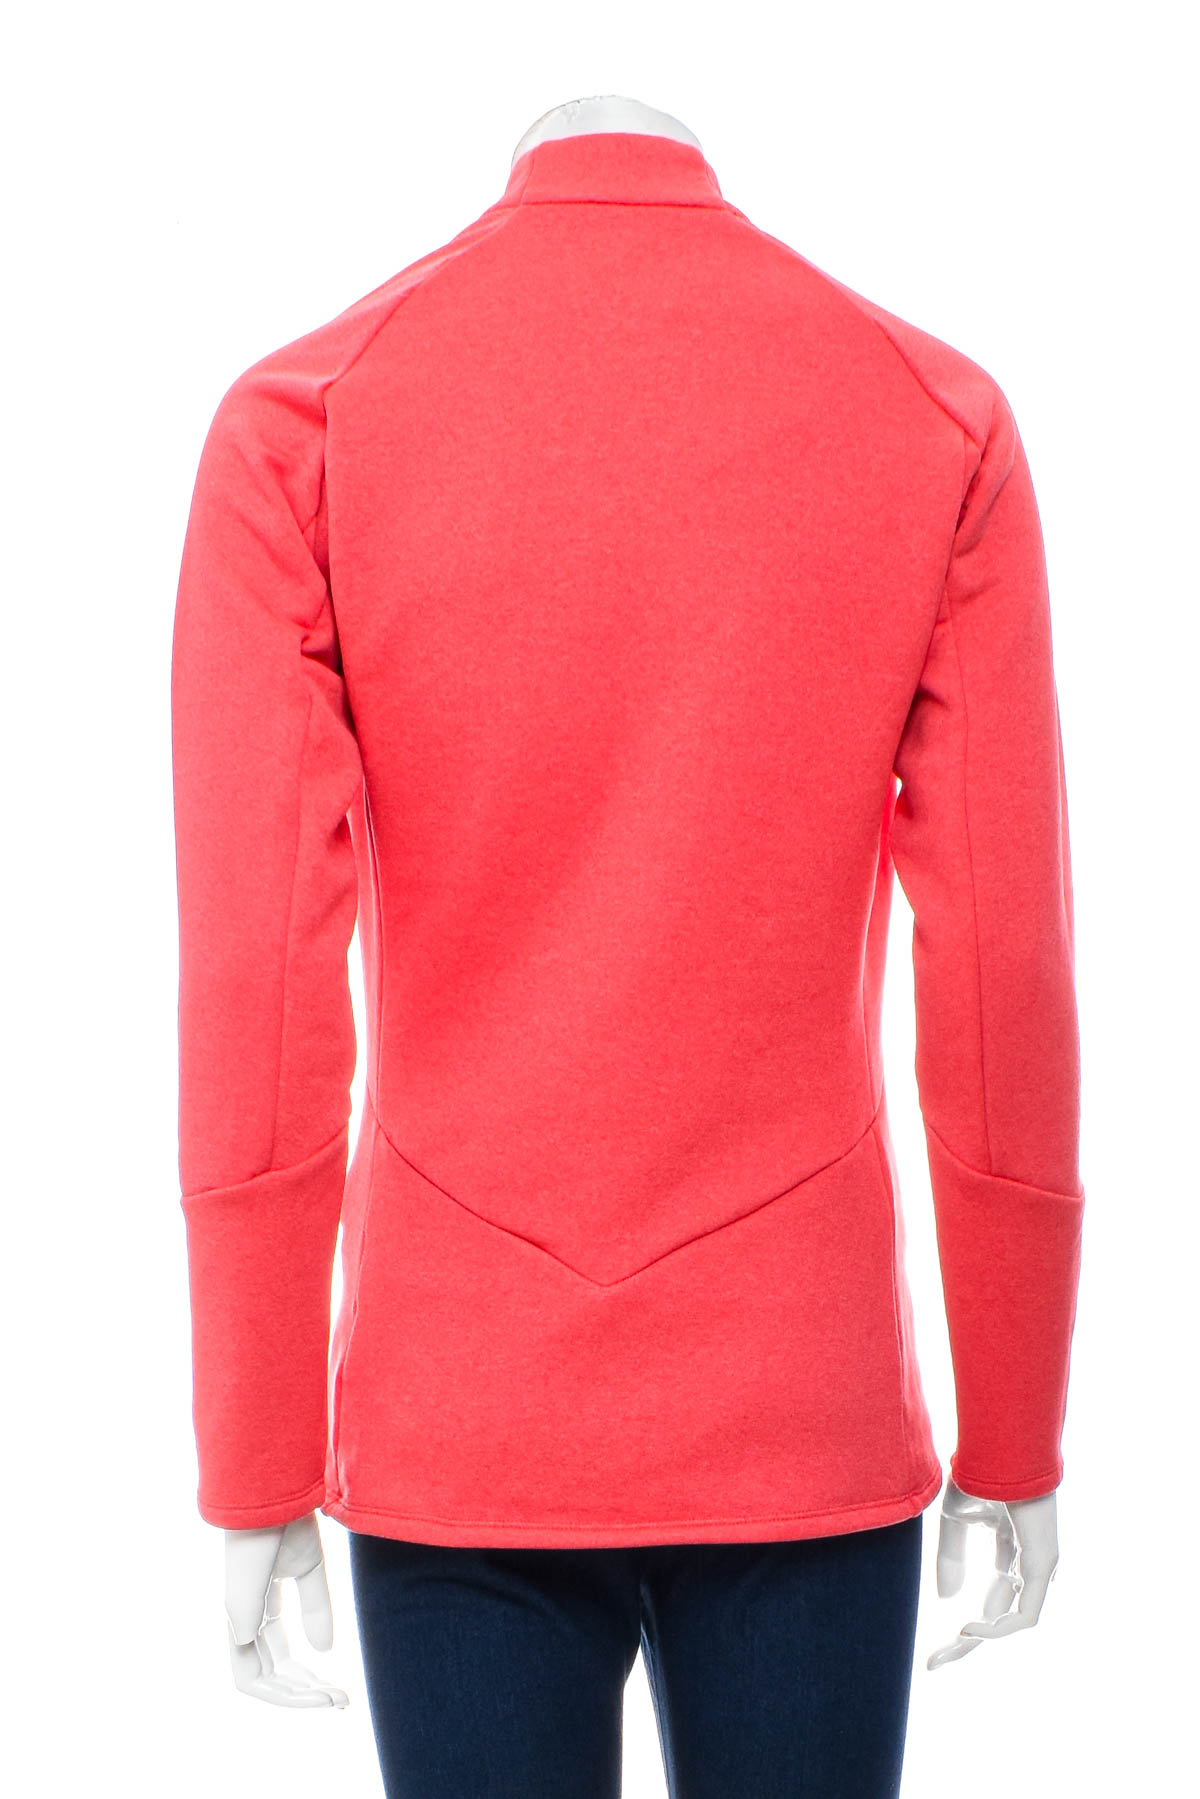 Women's sport blouse - DECATHLON - 1